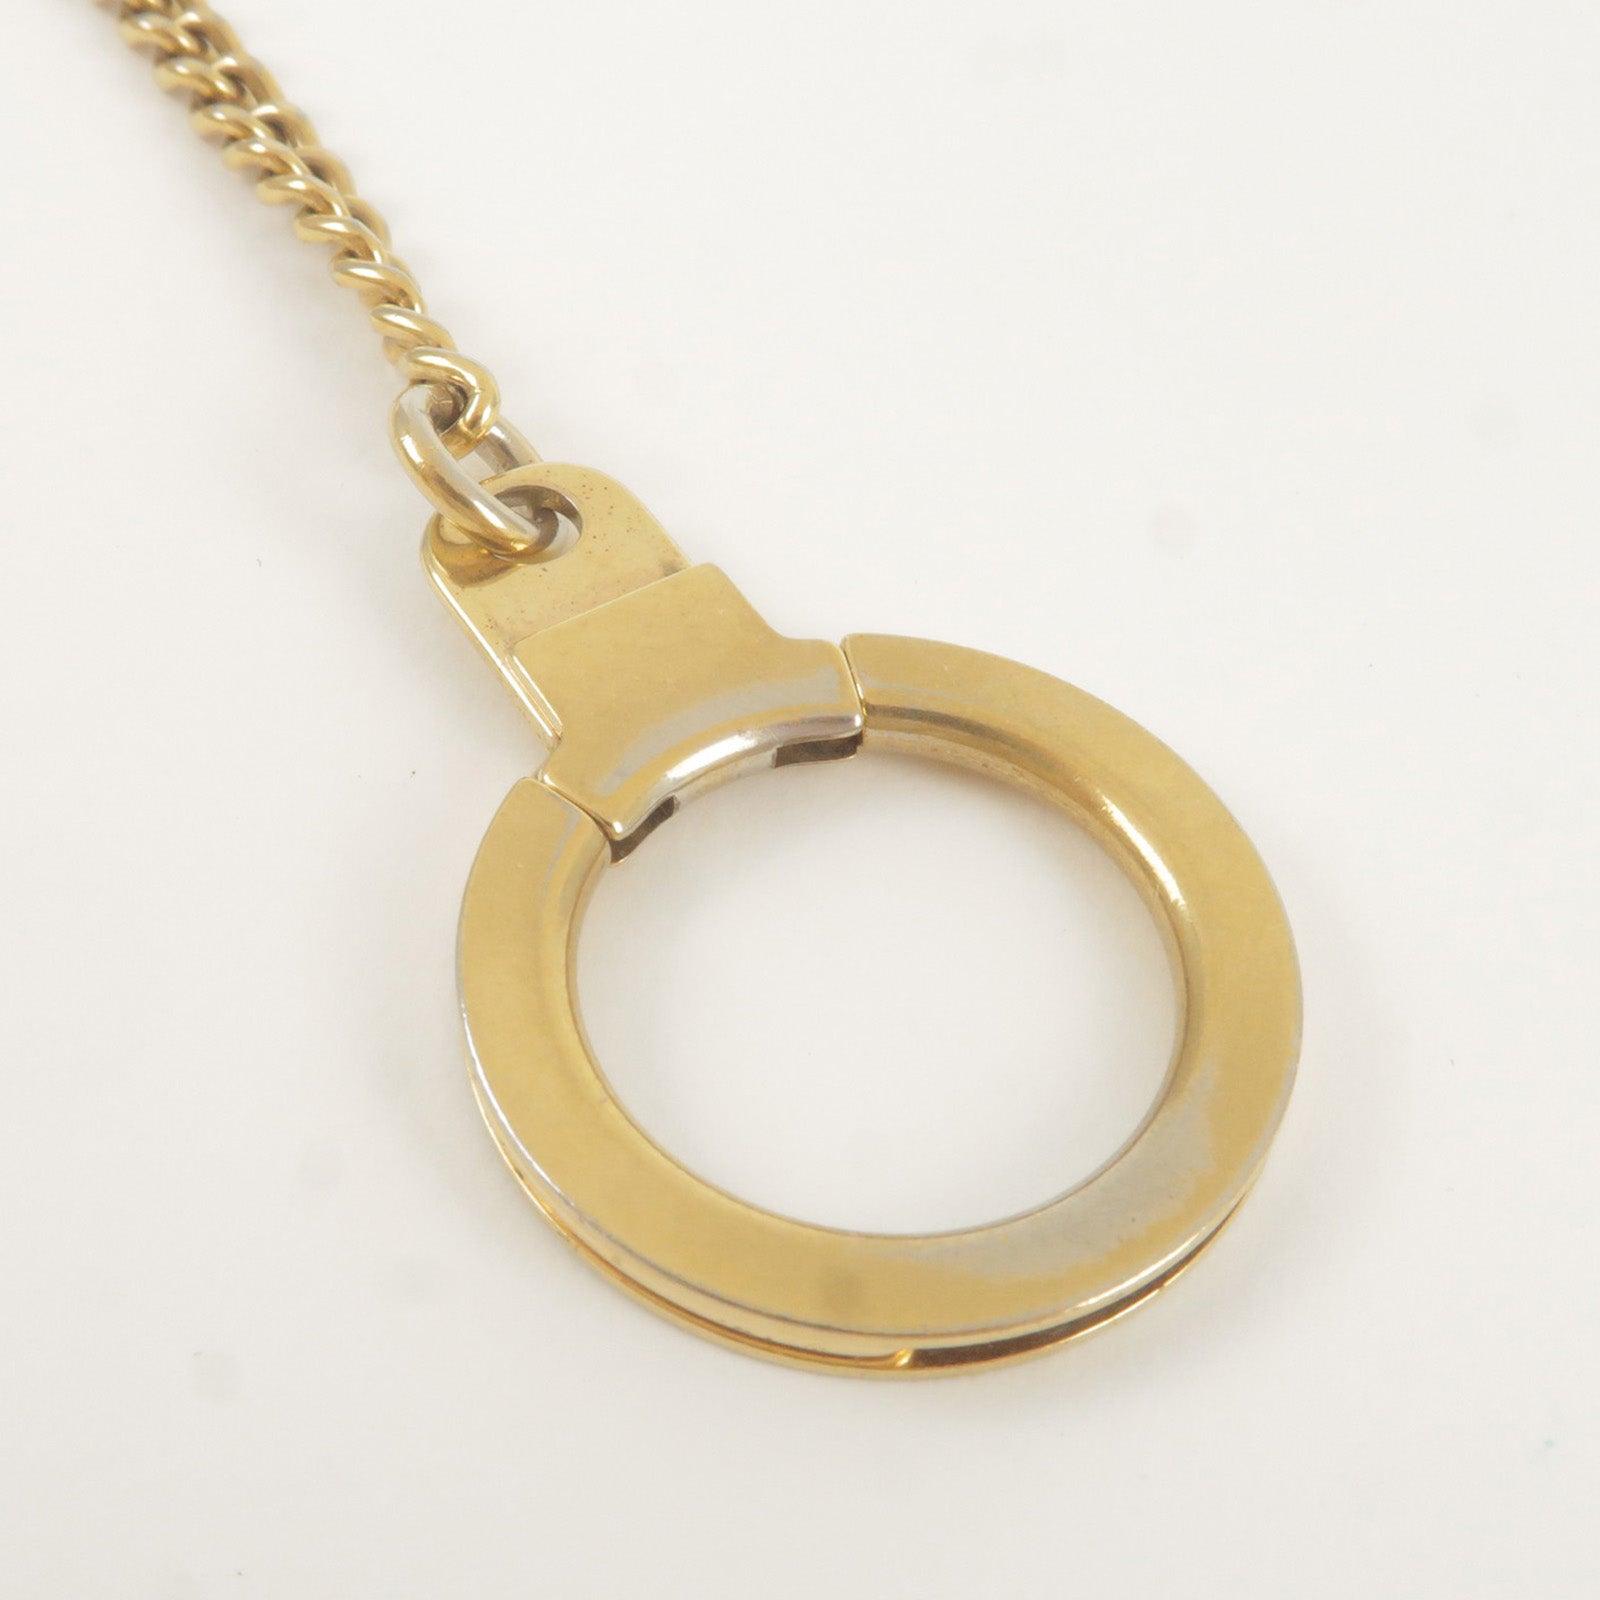 Louis Vuitton Keychain Necklace Replica